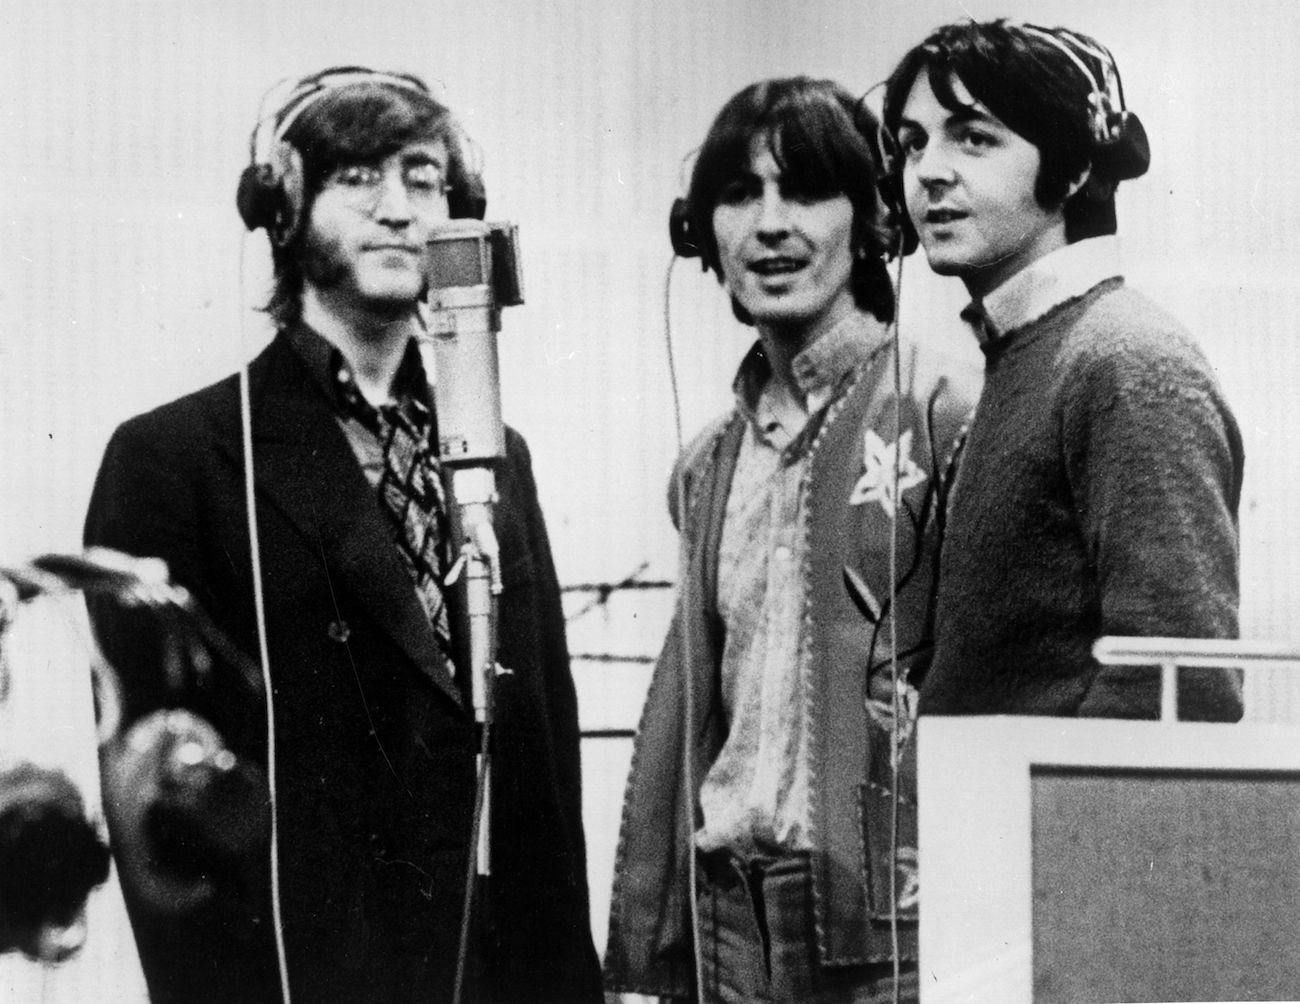 John Lennon, George Harrison, and Paul McCartney in the recording studio in 1968.